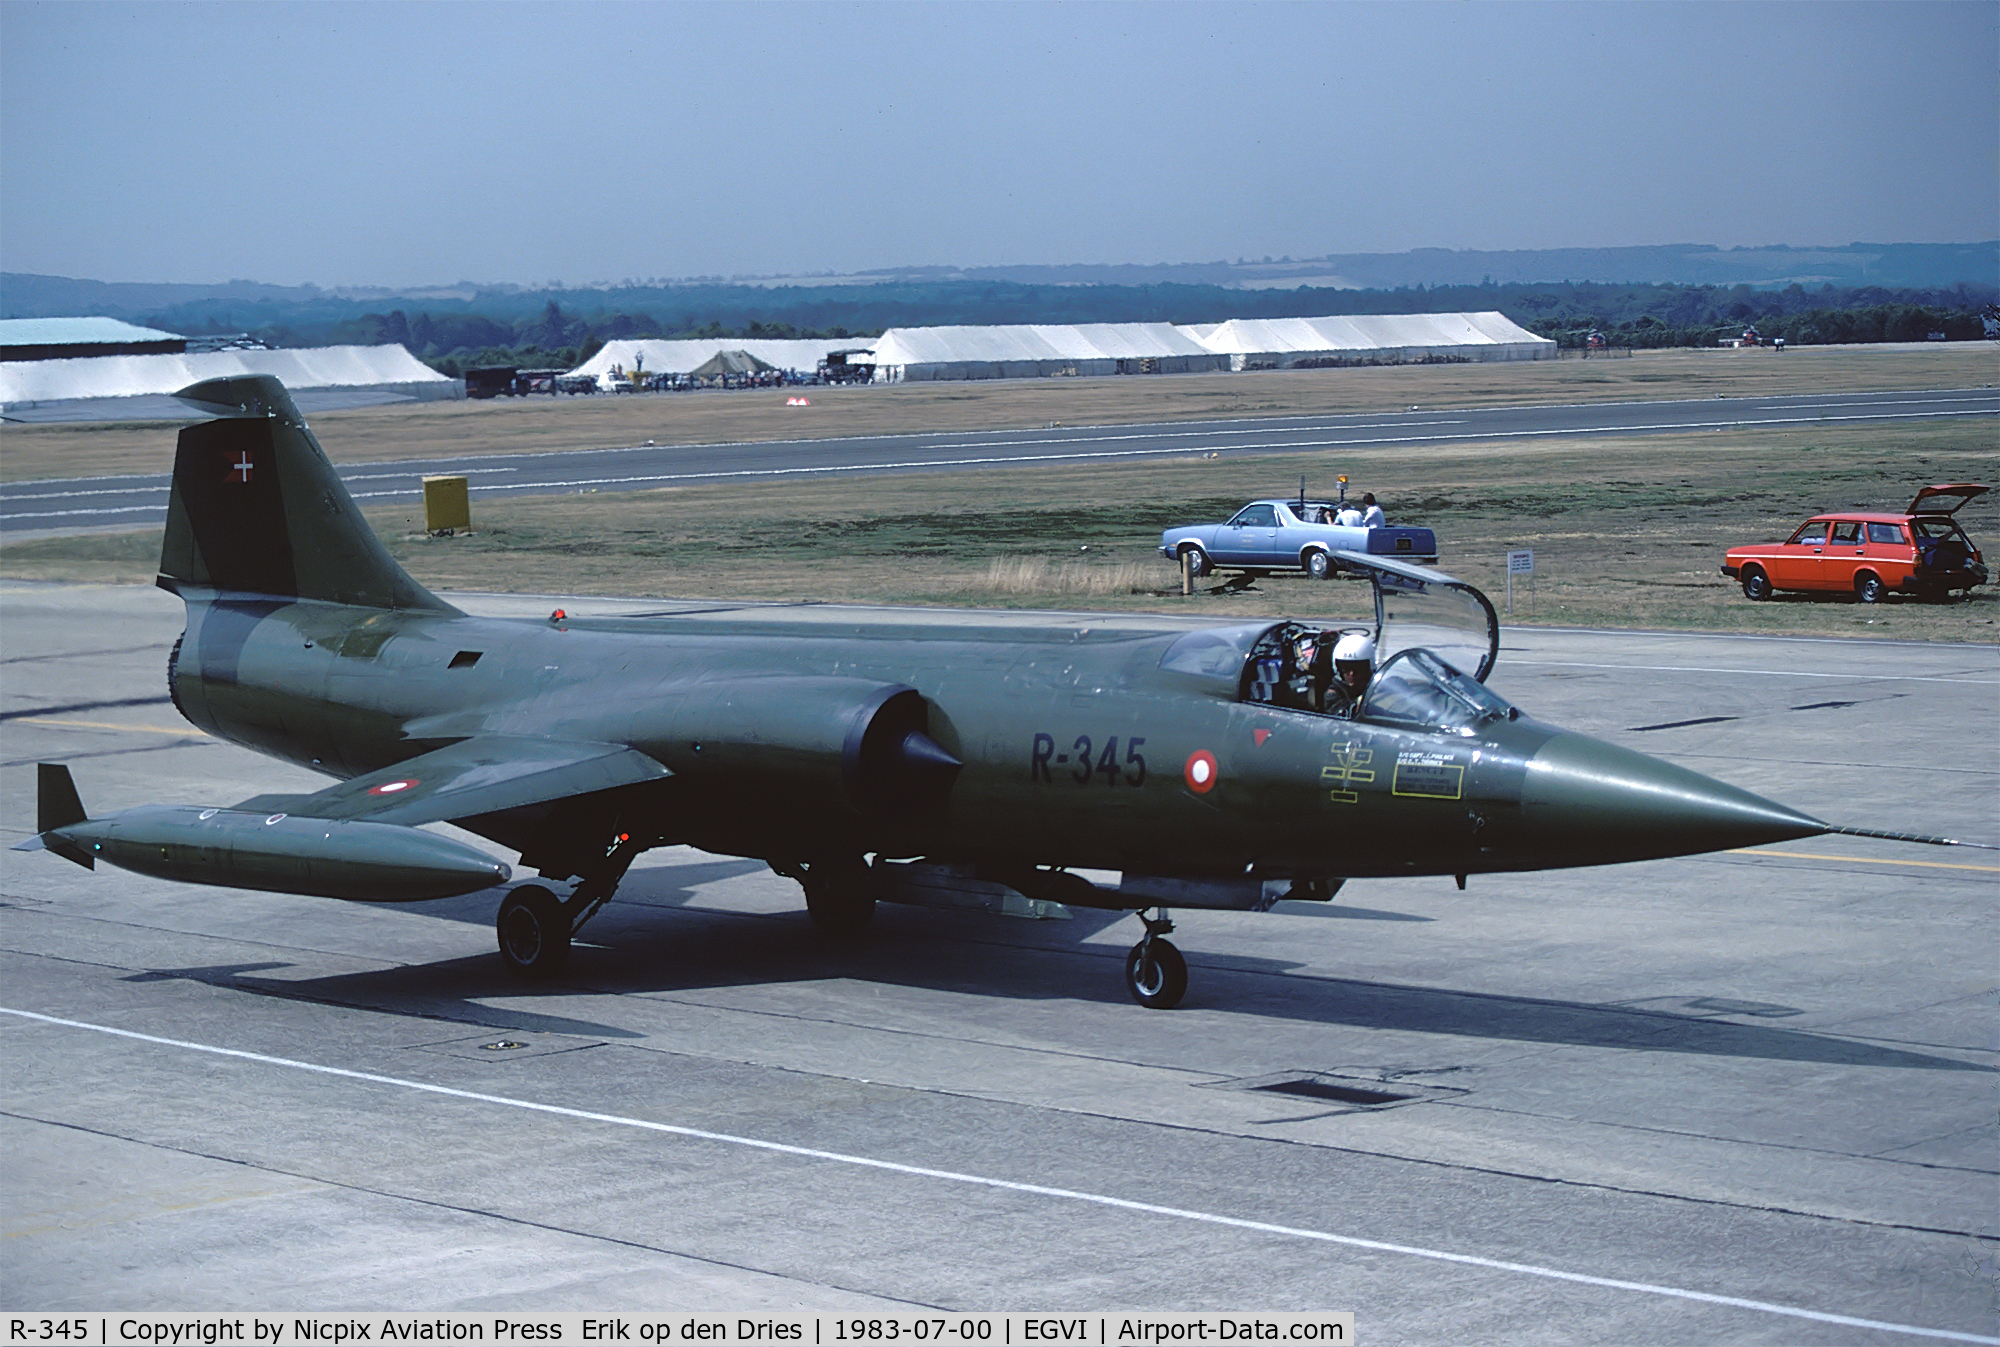 R-345, Lockheed F-104G Starfighter C/N 683D-6044, R-345 attended the RIAT 1983 at RAF Greenham Common.